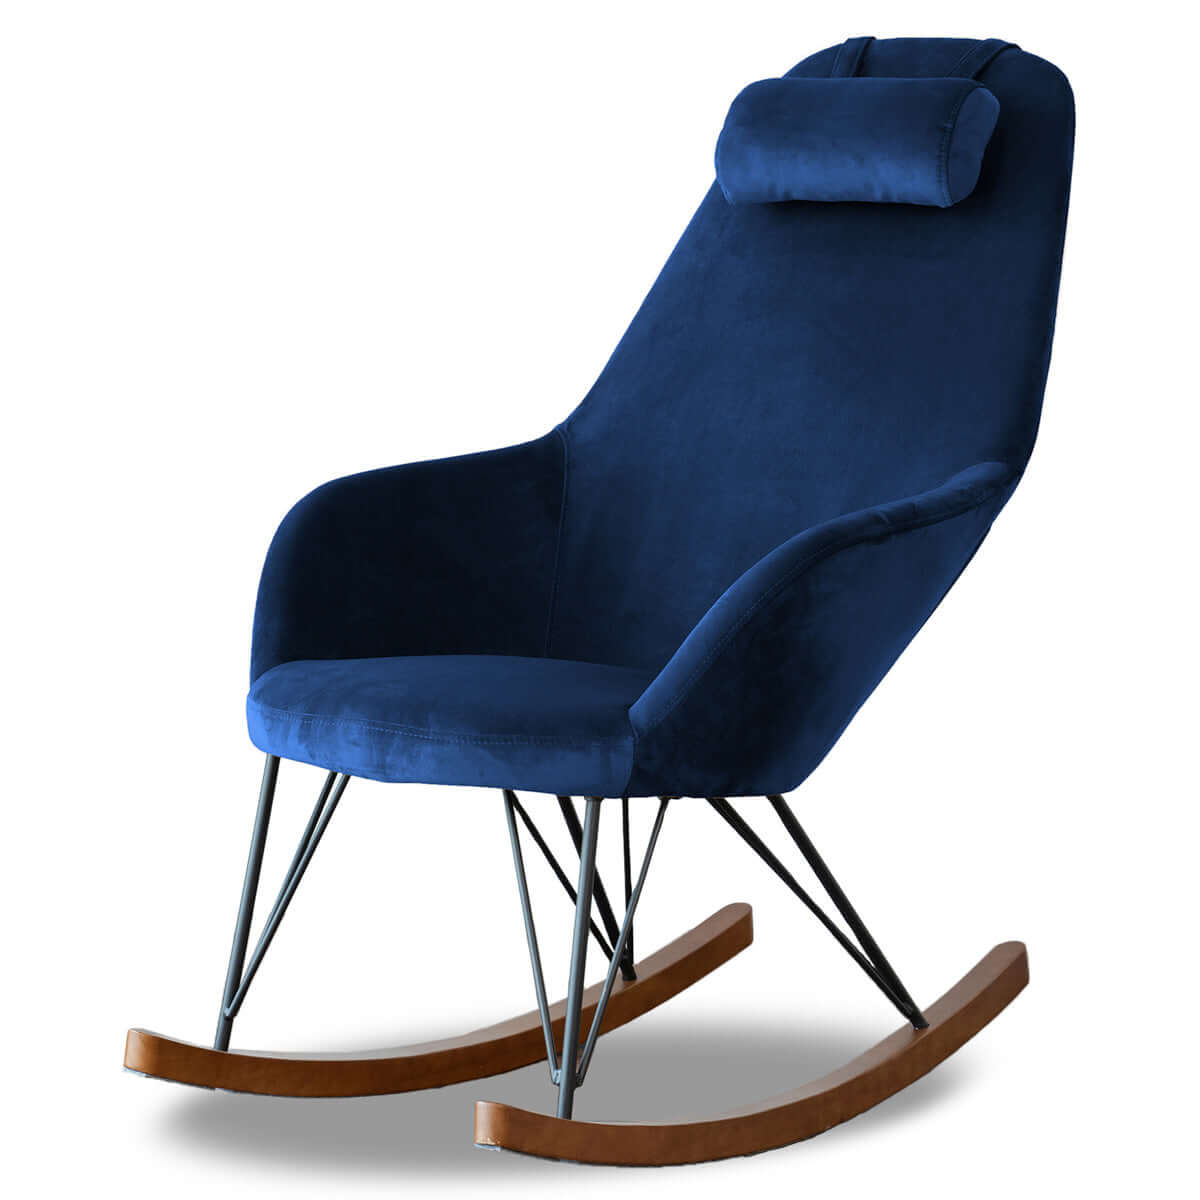 Chloe Mid Century Modern Rocker Livingroom and Bedroom Chair Grey Linen